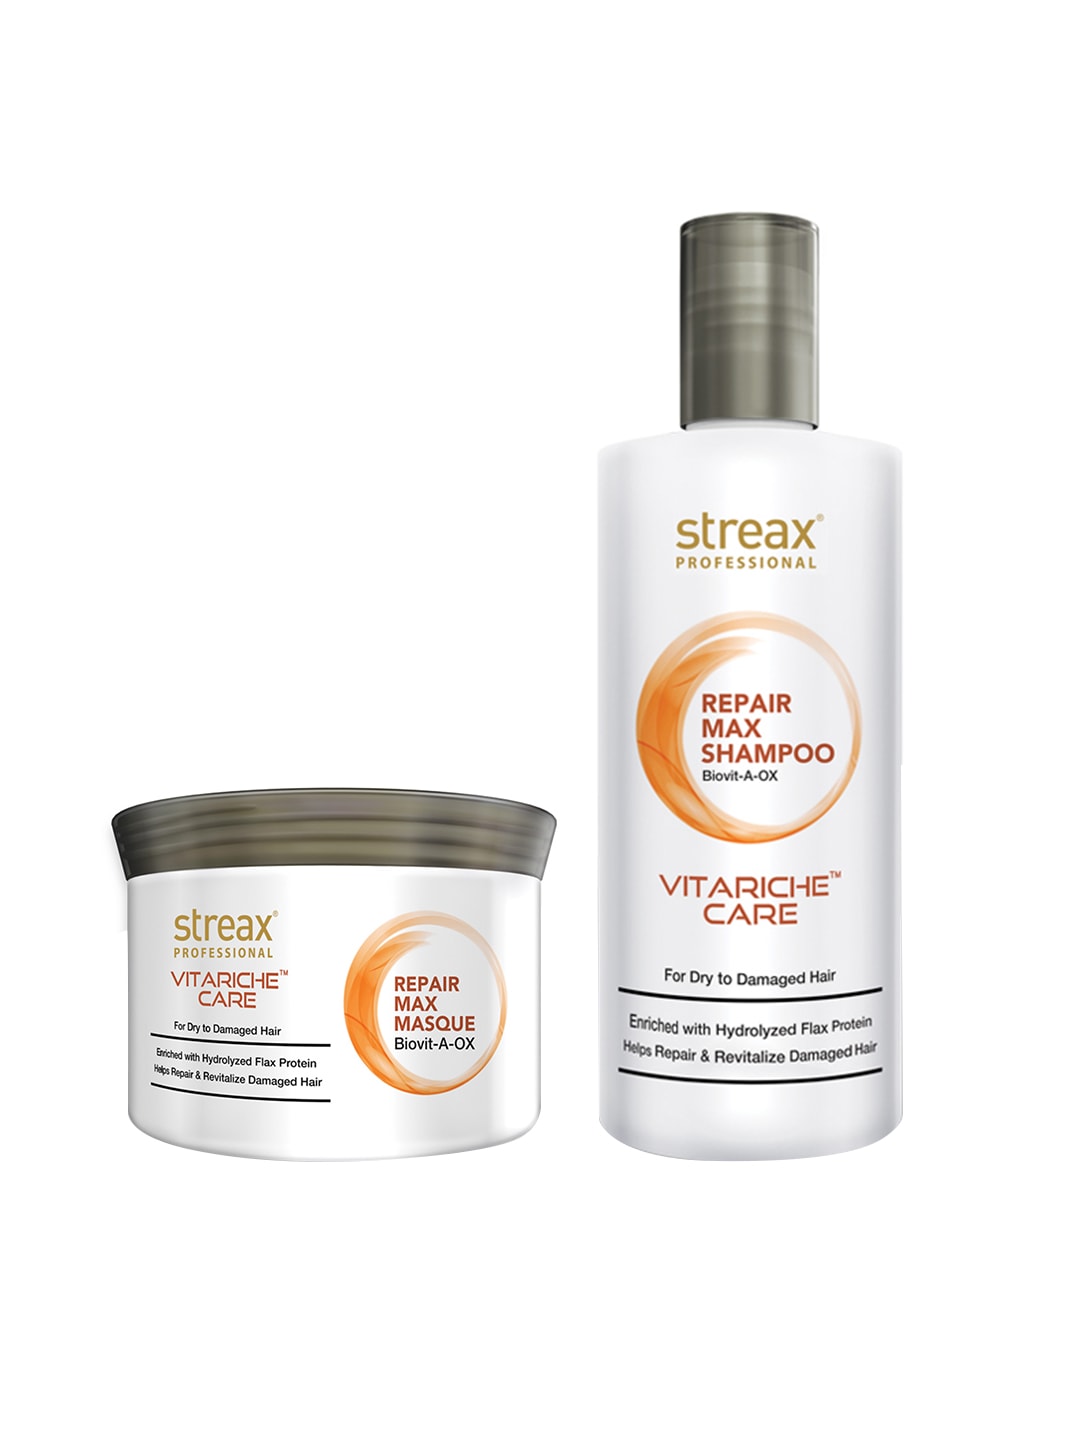 Streax Professional Set of Vitariche Care Repair Max Shampoo & Conditioner  Price in India, Full Specifications & Offers 